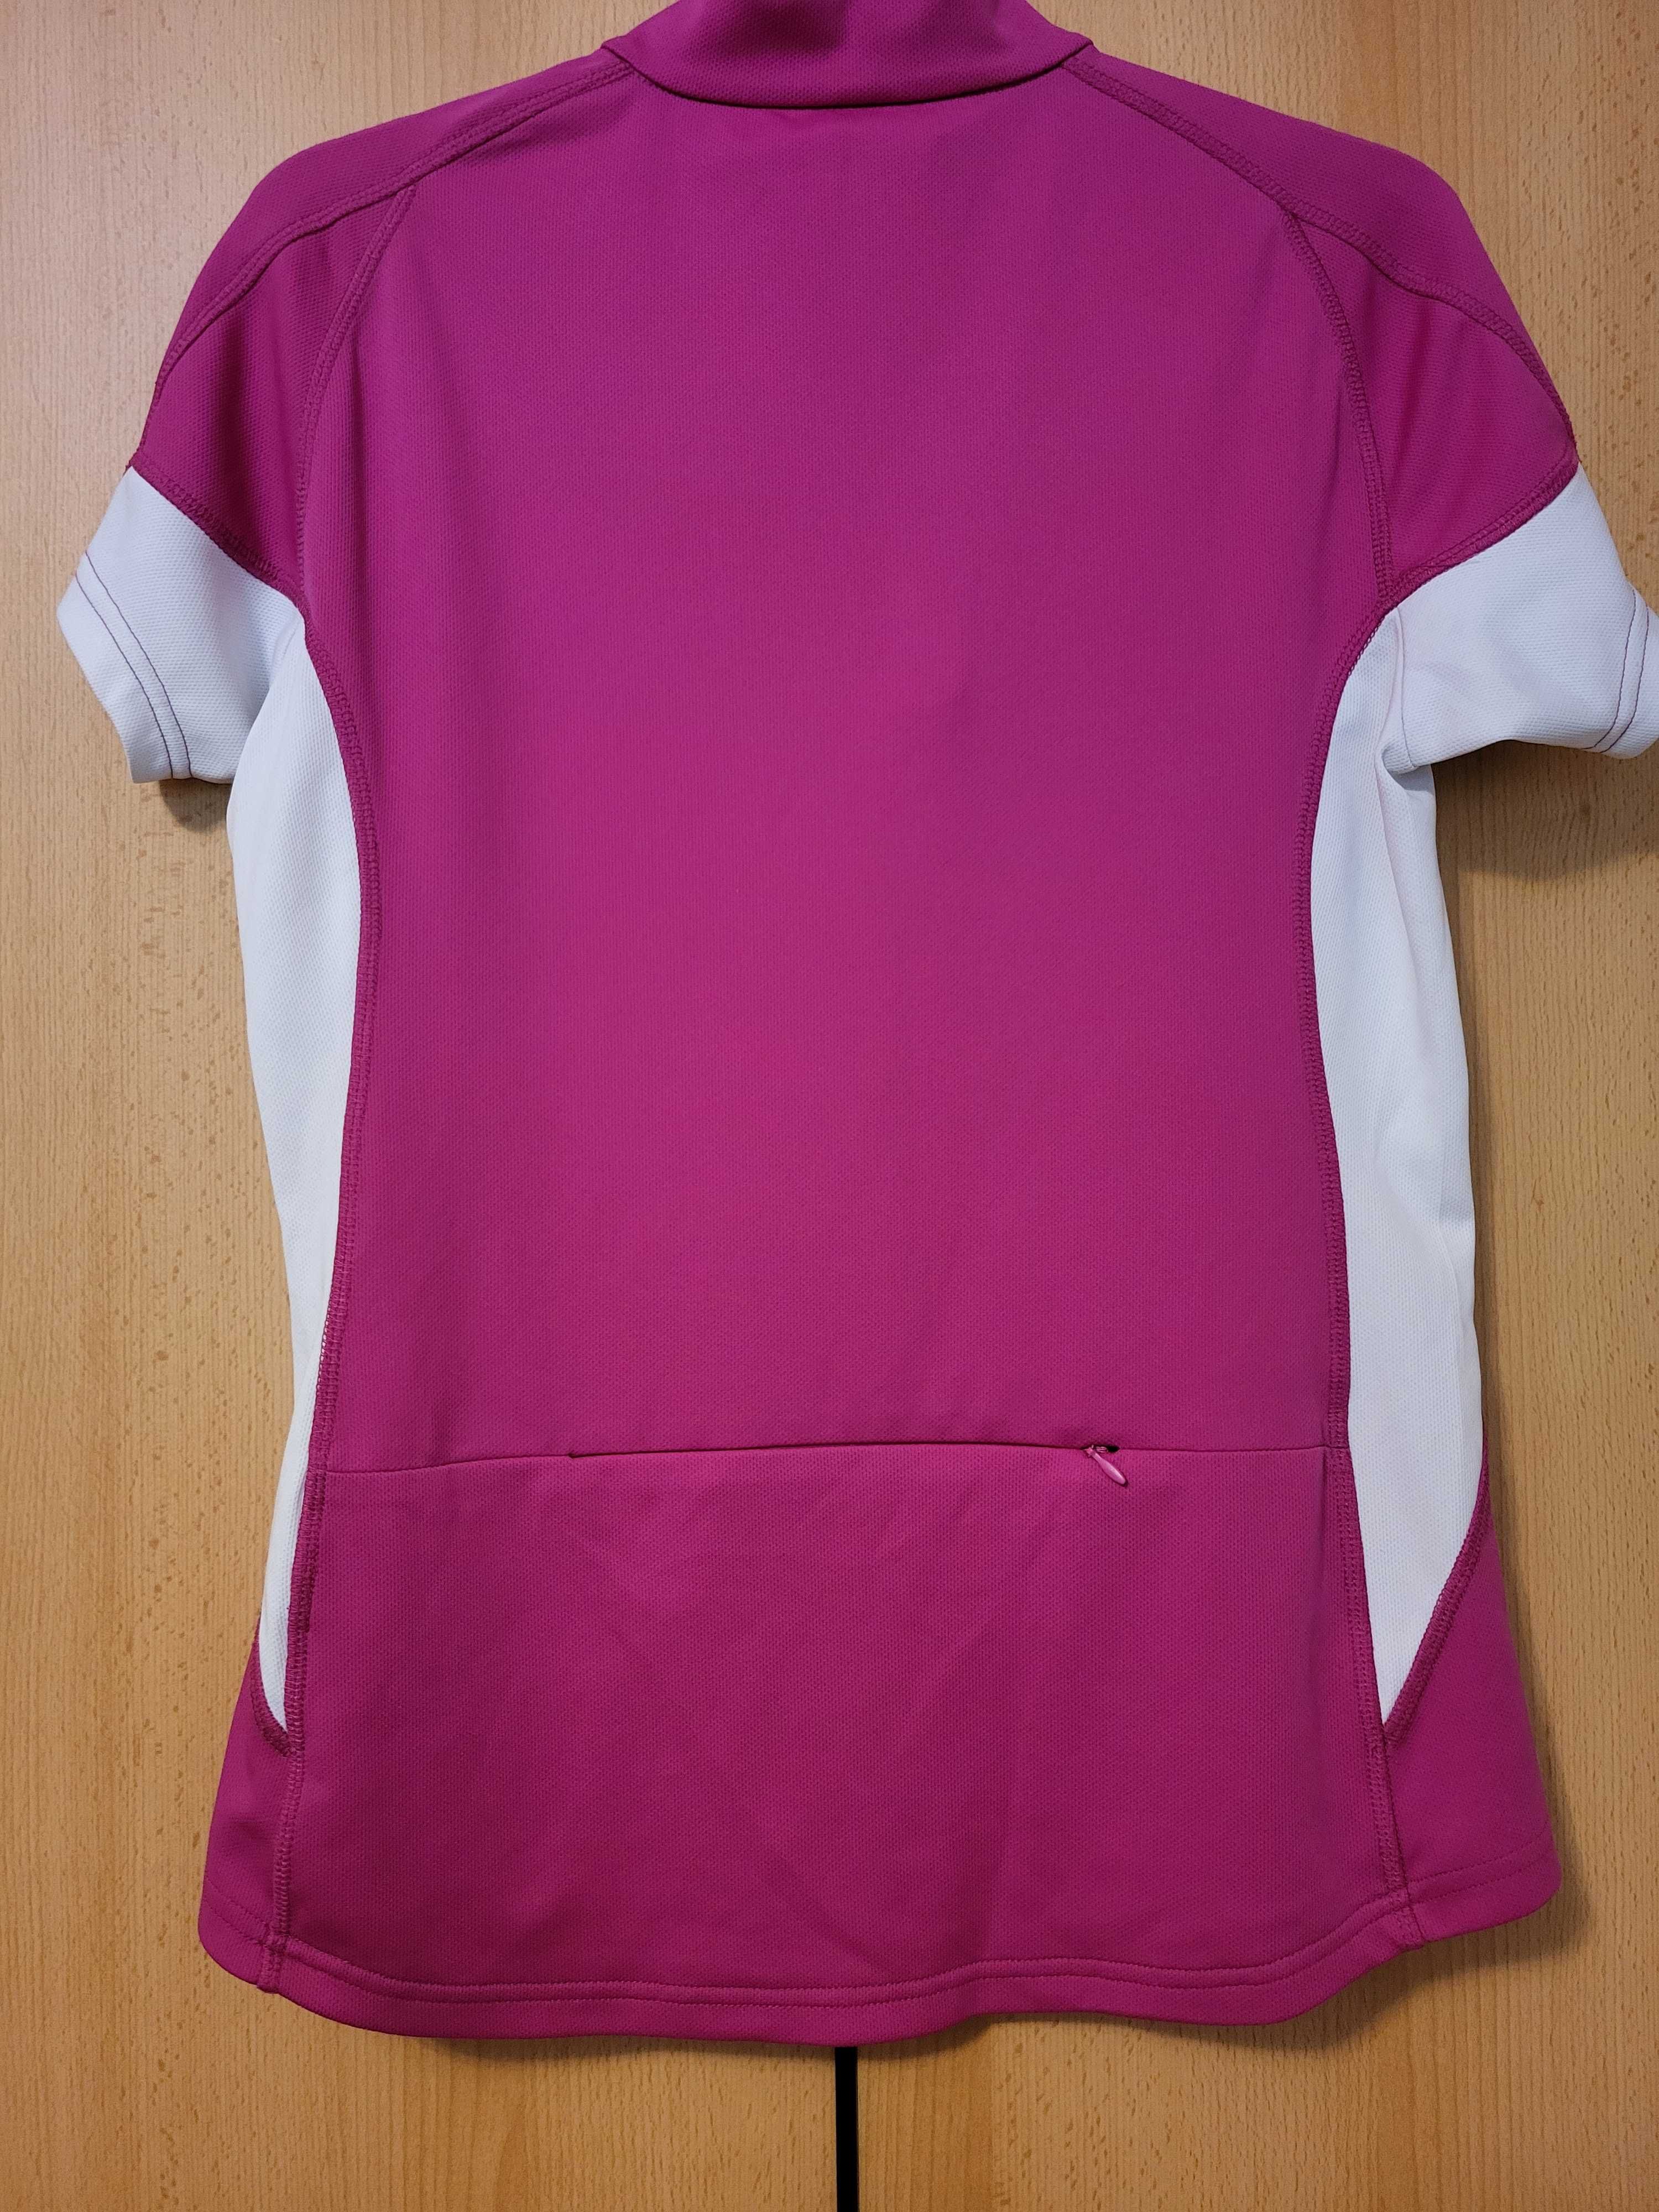 Damska koszulka sportowa roz L